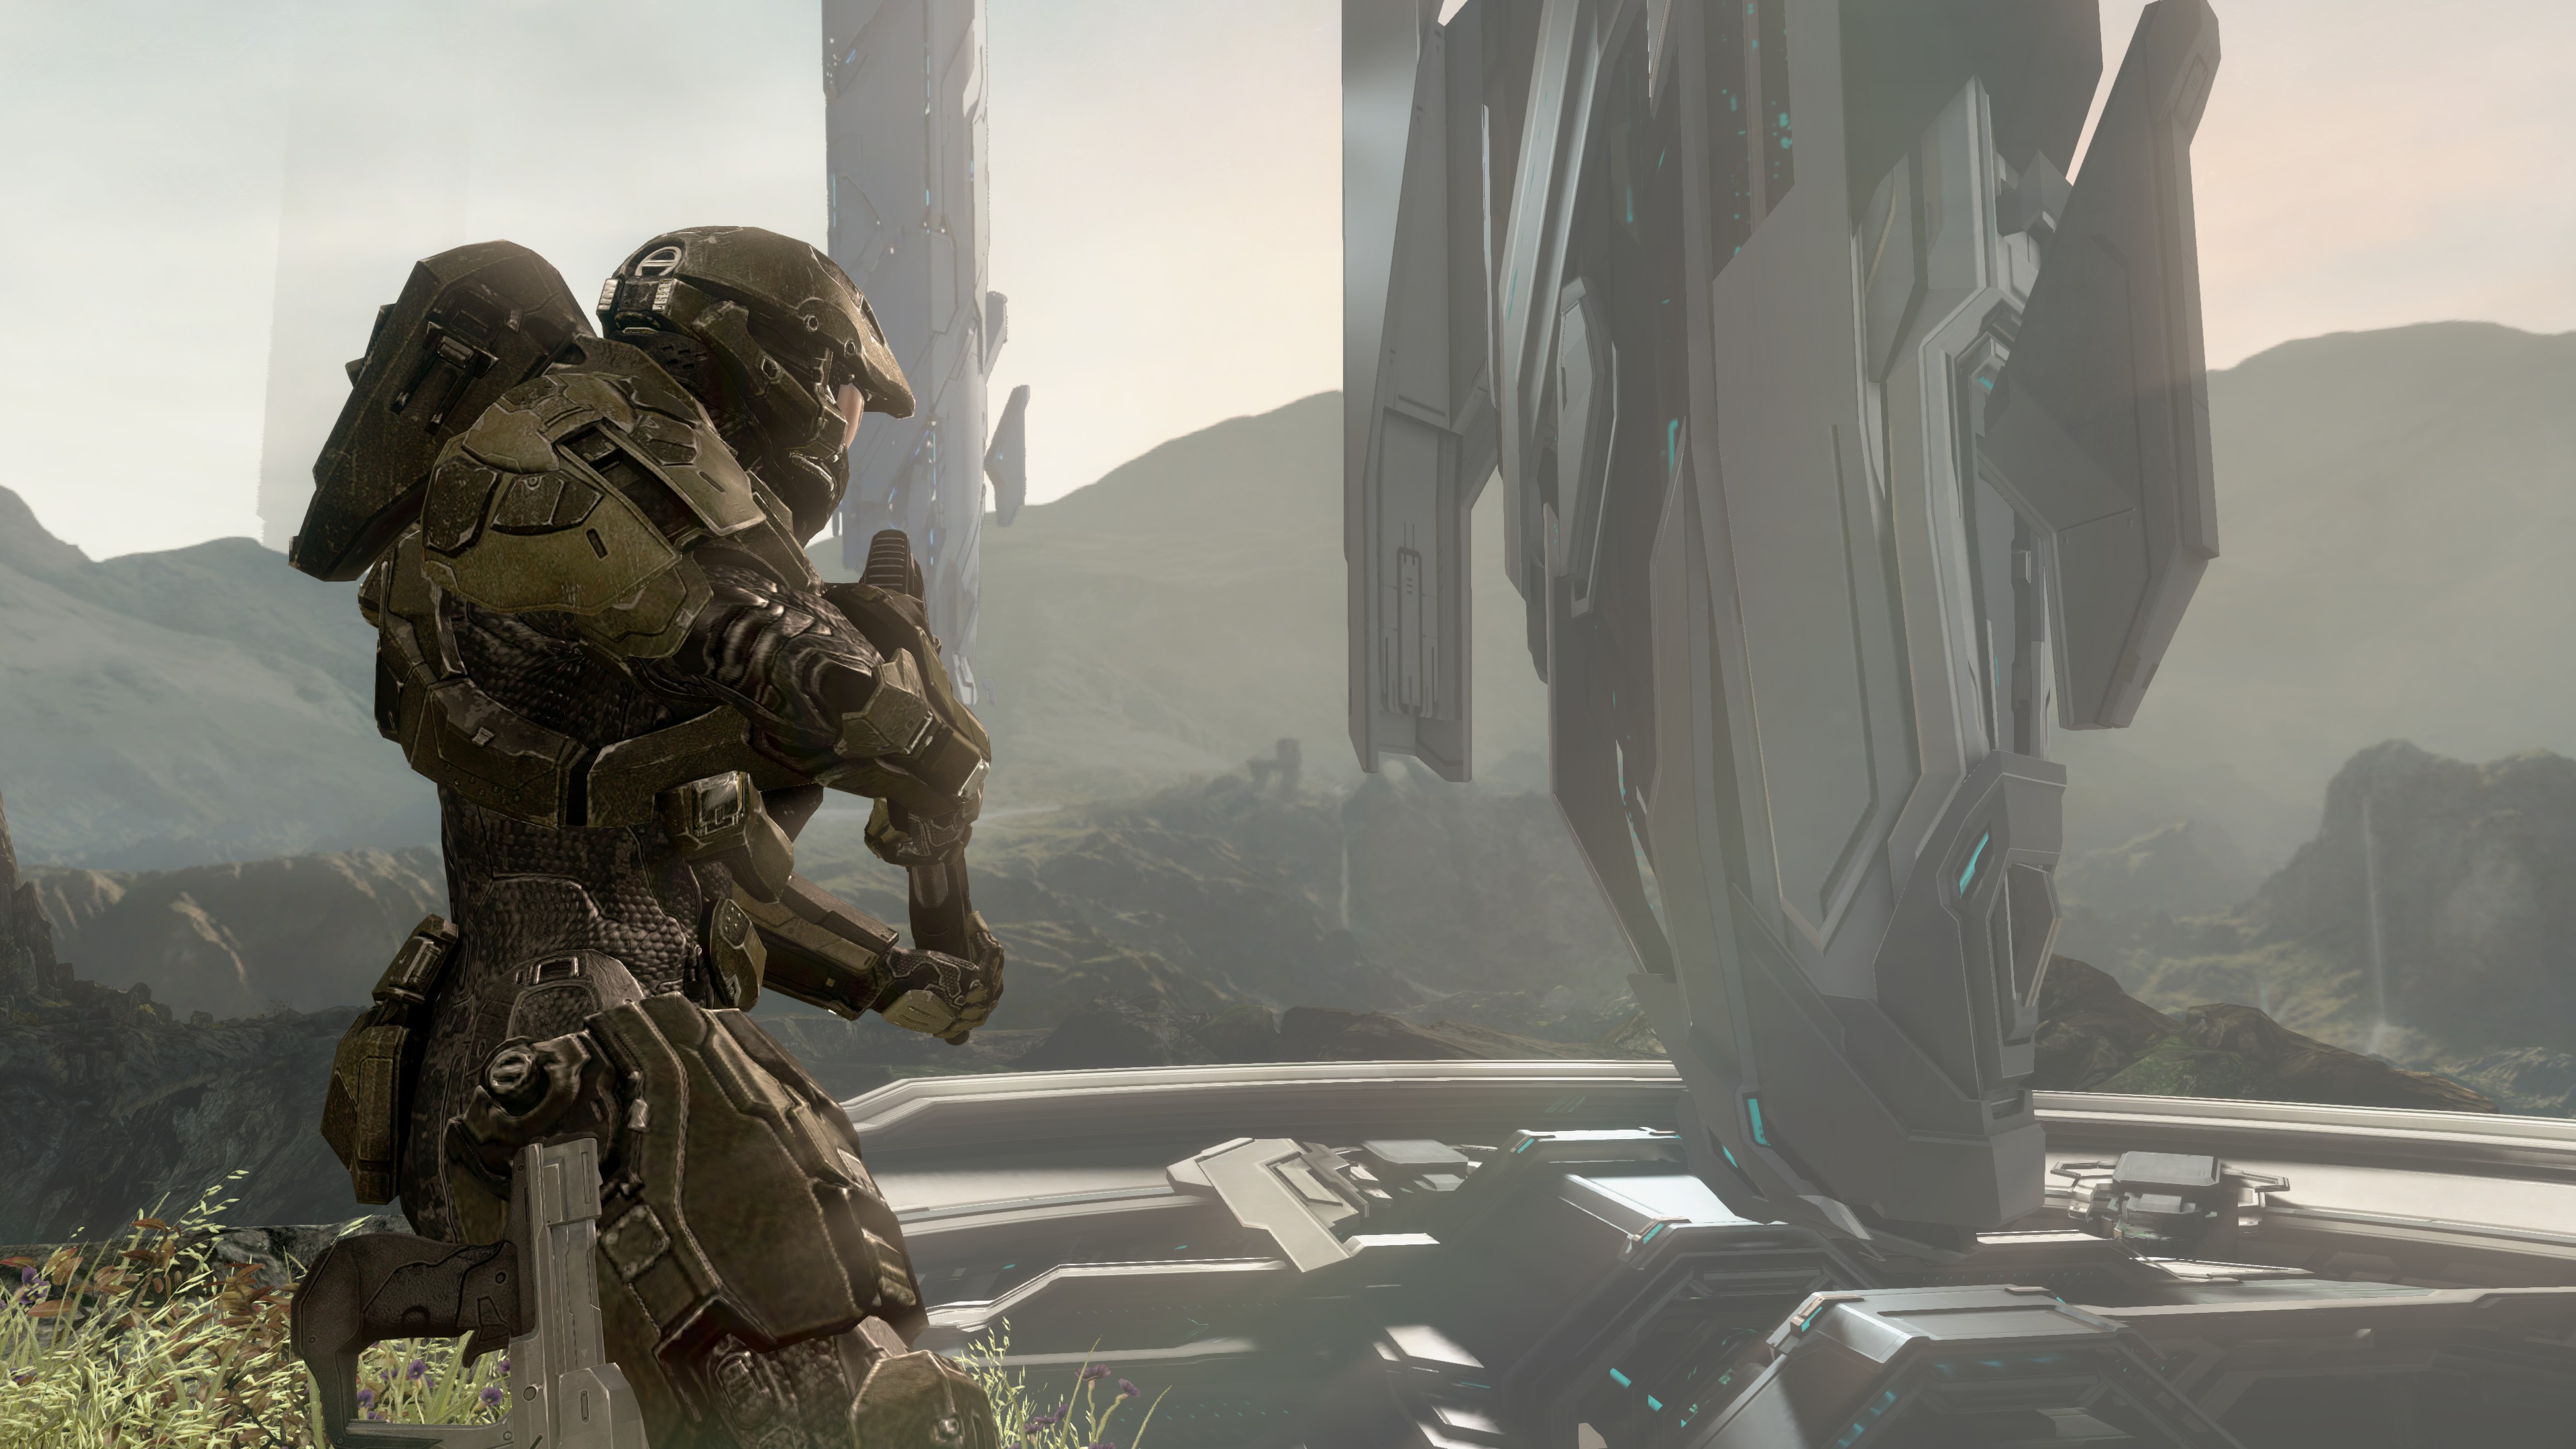 Why “Halo 4: Forward Unto Dawn” was almost PERFECT